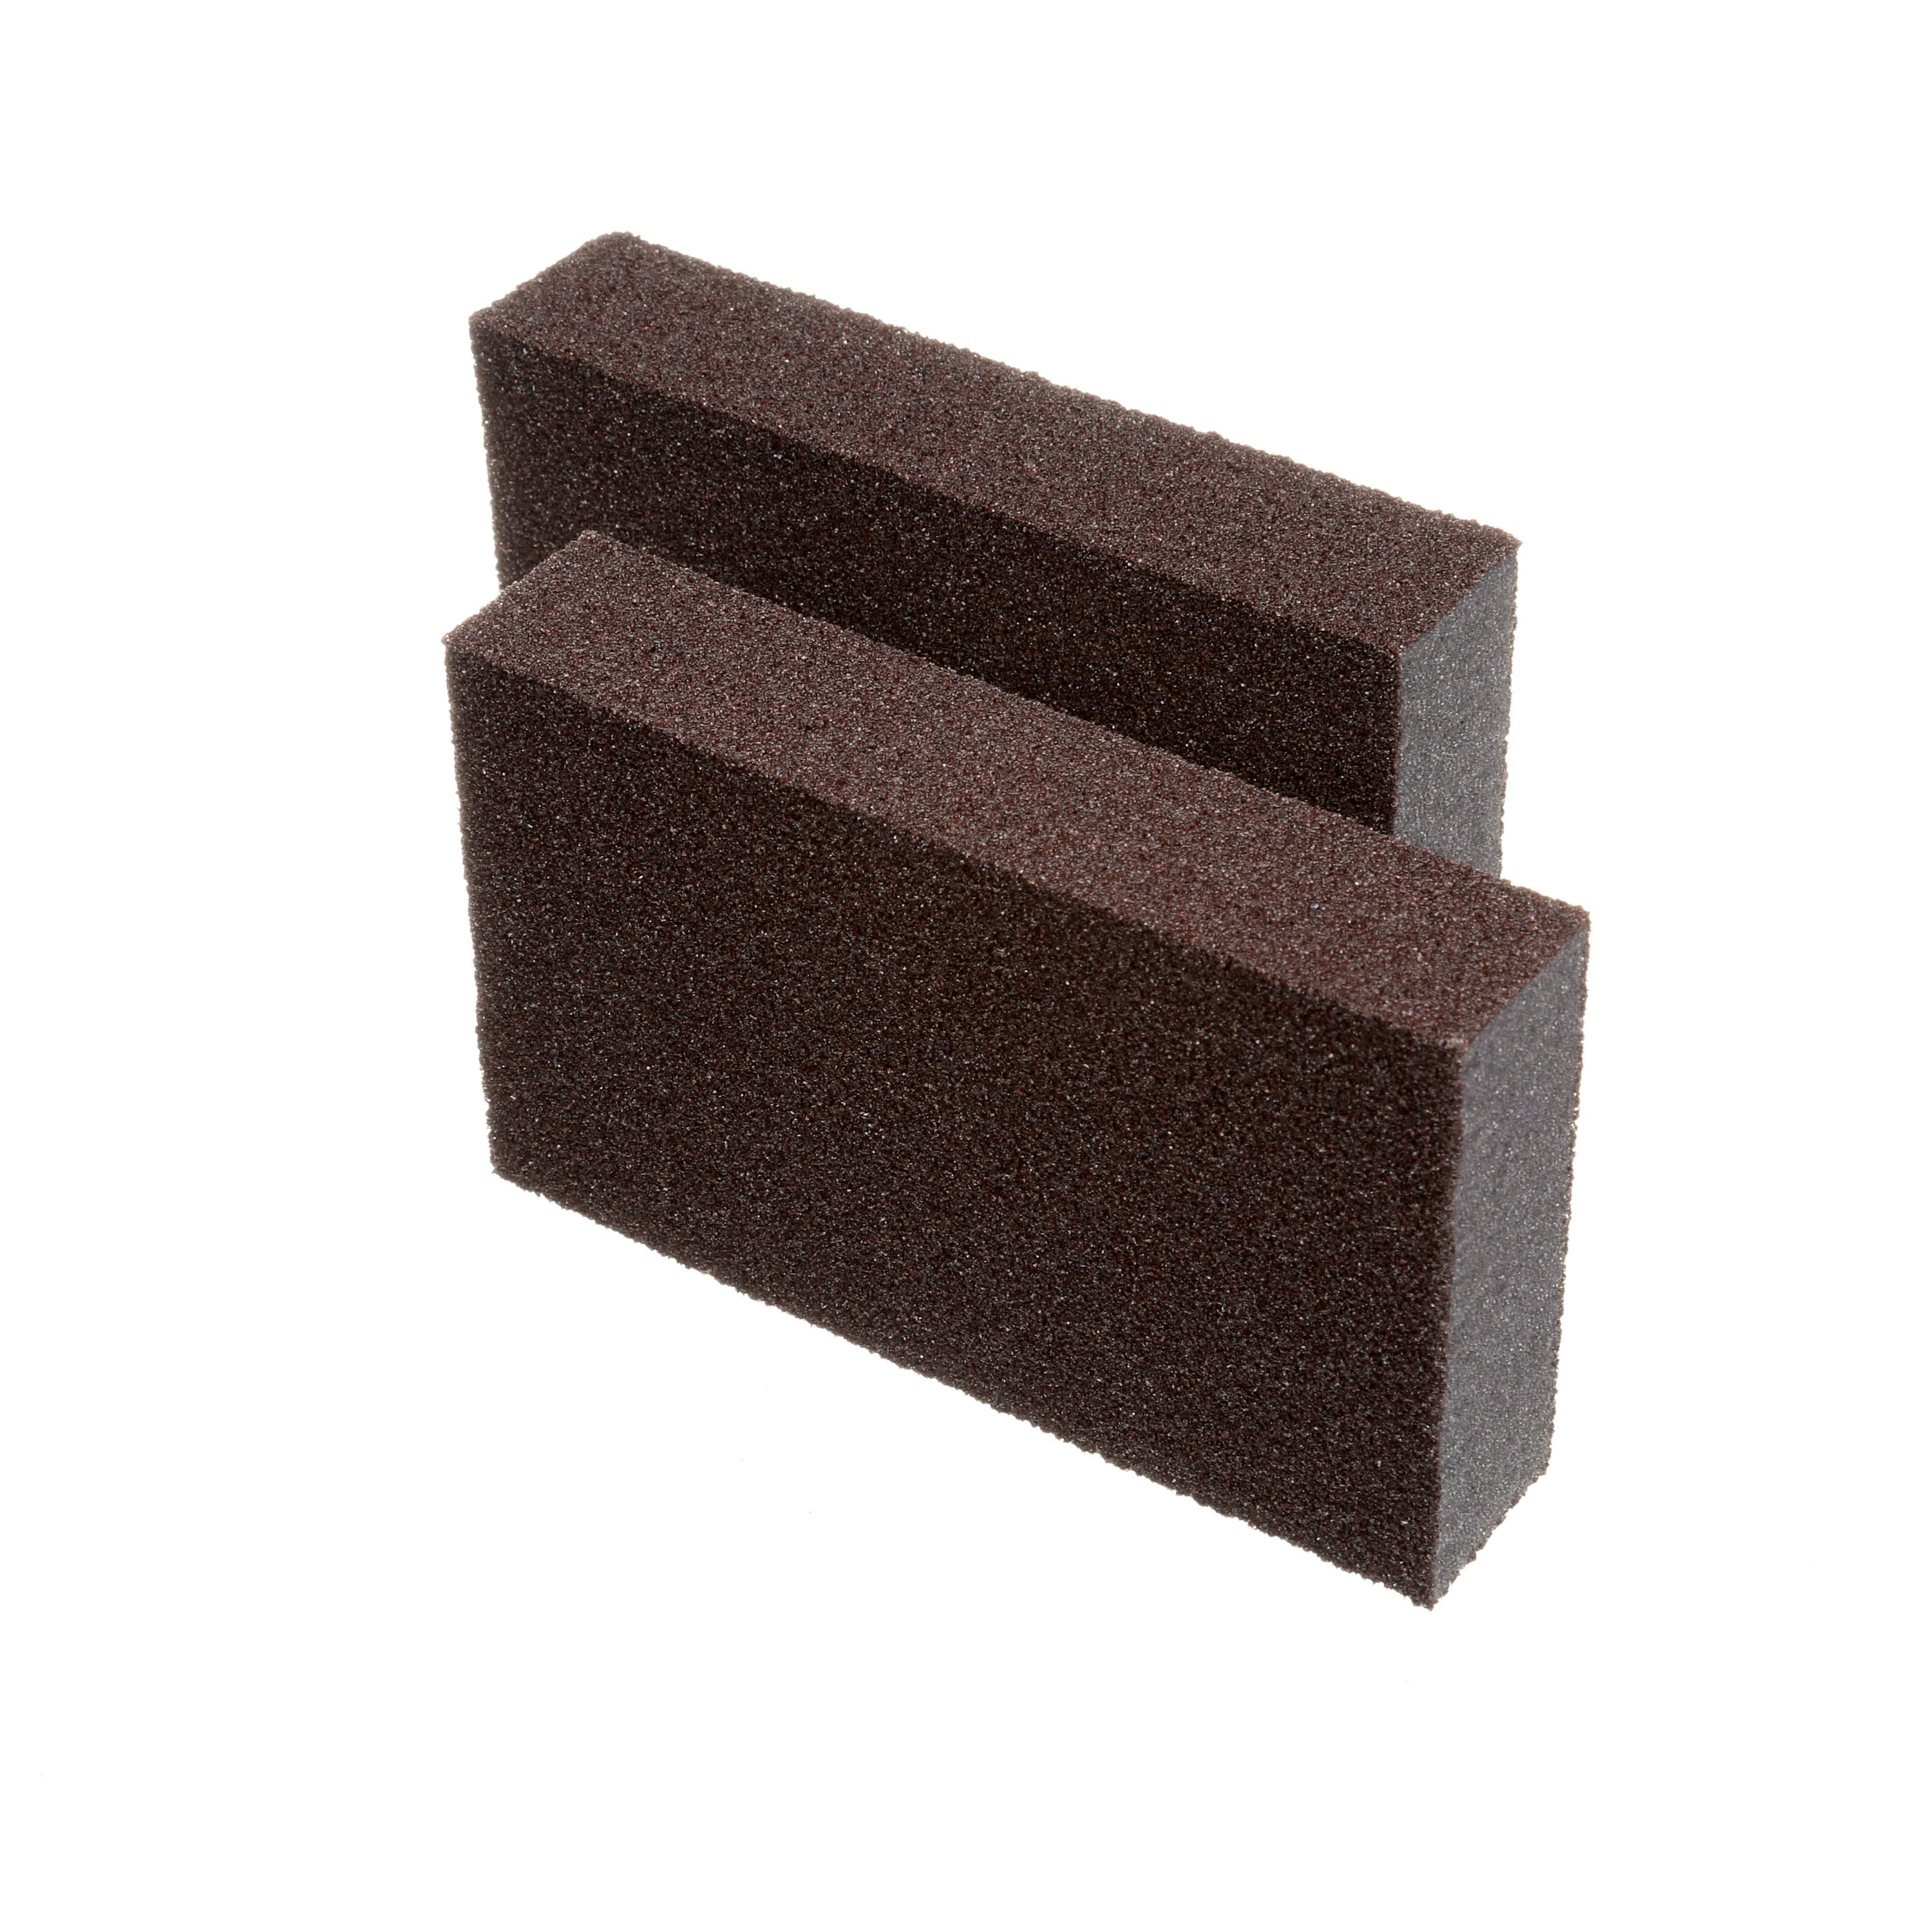 3M Pro Grade Precision Dual Angle Sanding Sponge